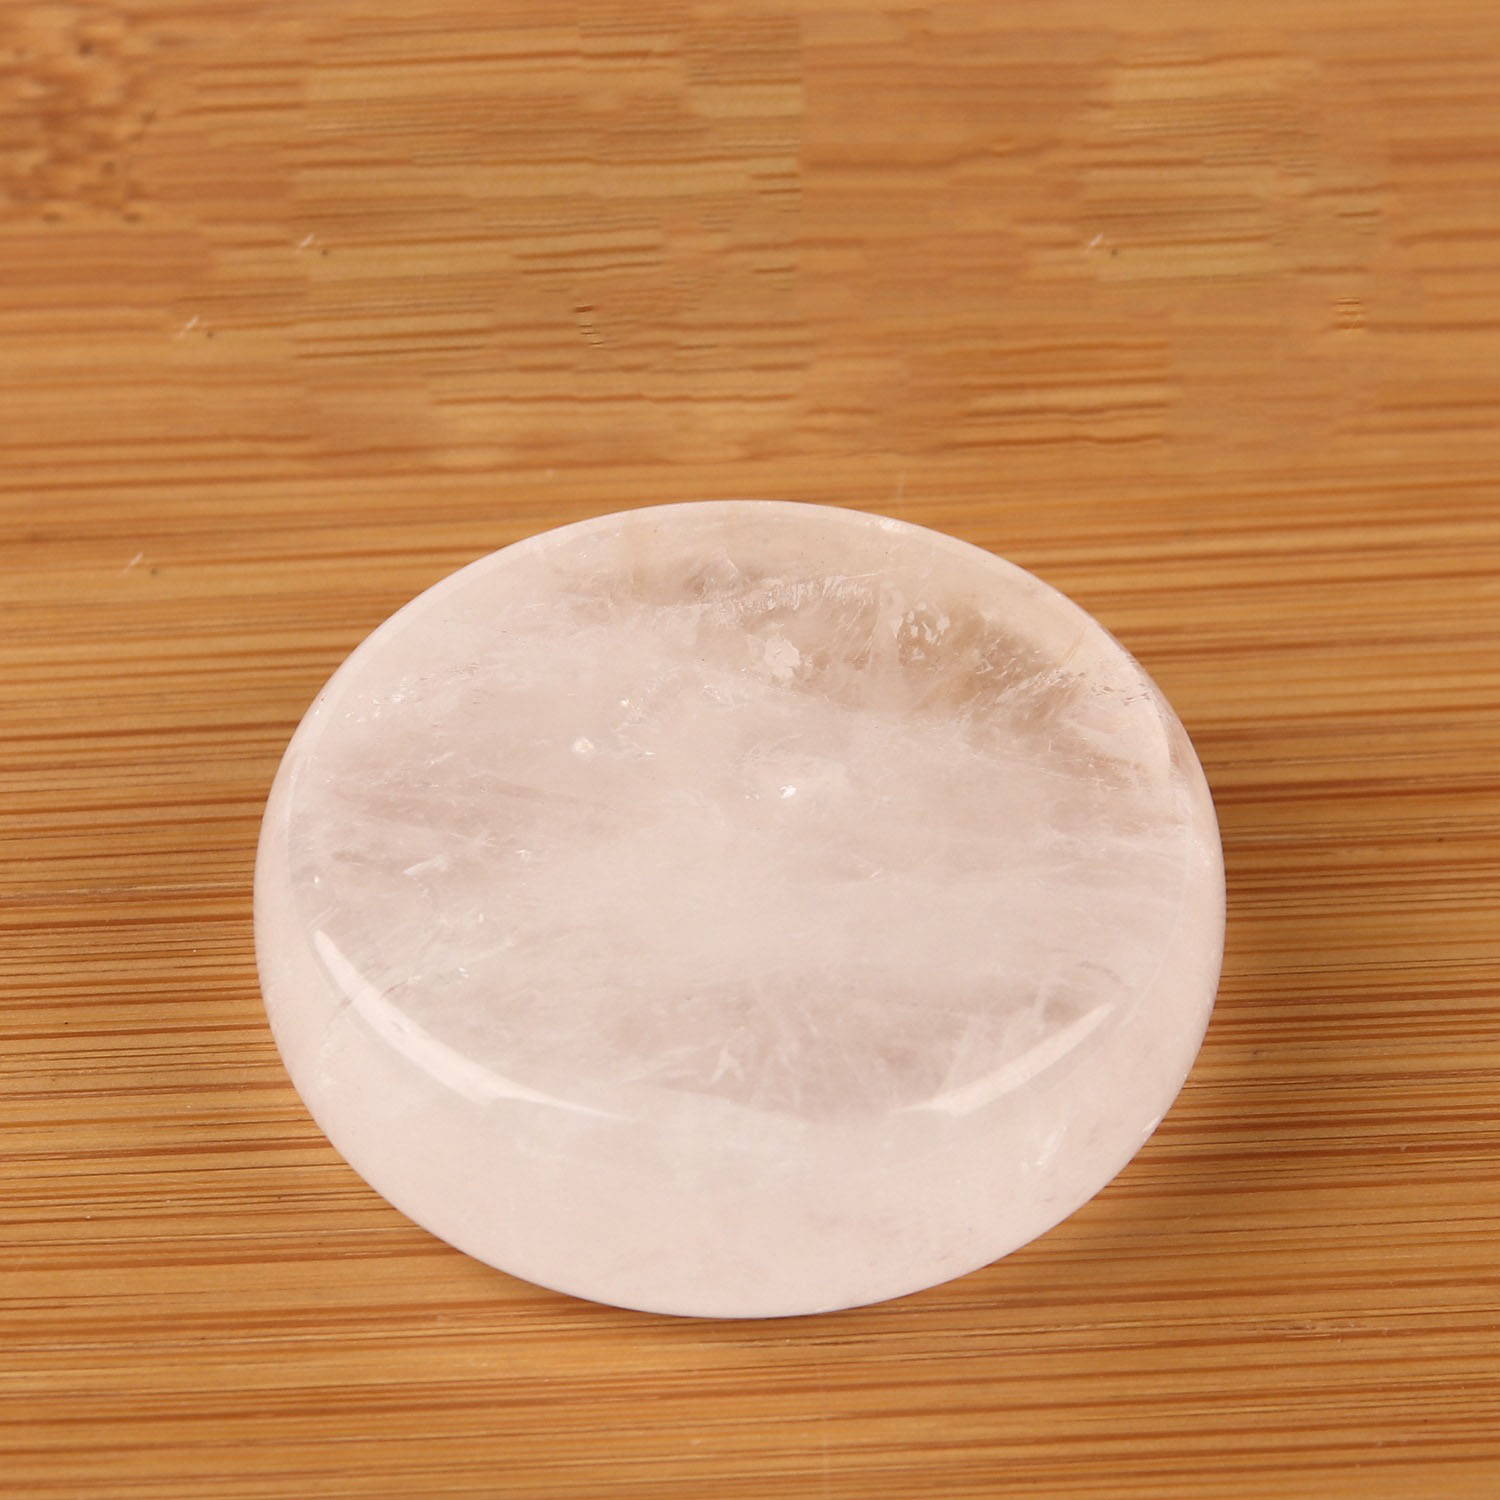 Natural white crystal